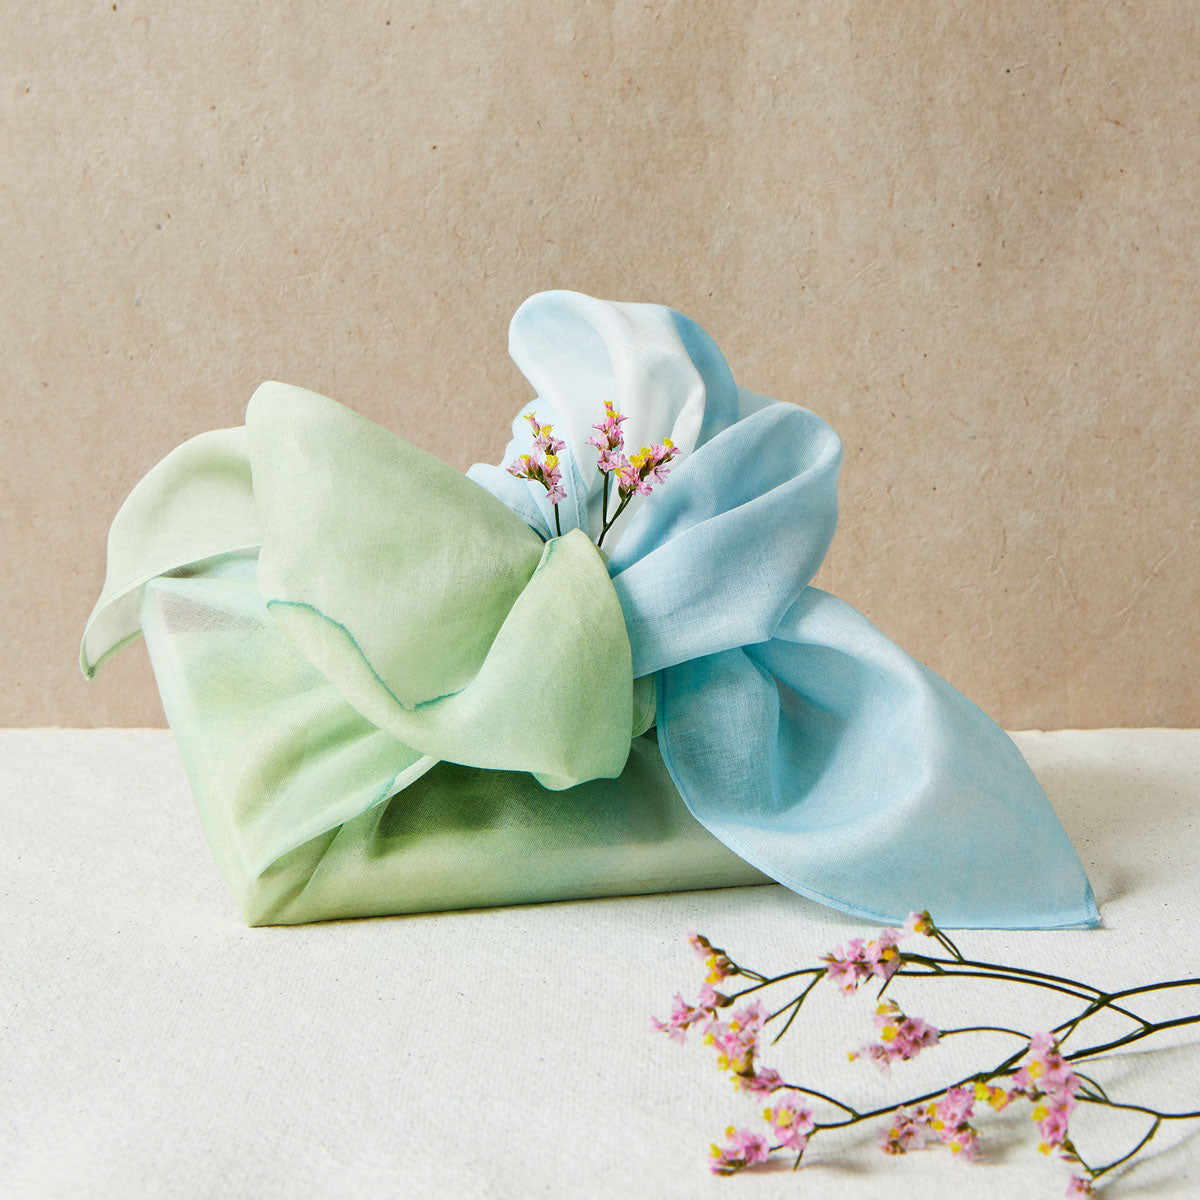 furoshiki-wrapping-cloth-life-collection-wisdom-wrapped-gift-chocolate-ma-space-design-tsutsumi-revolution